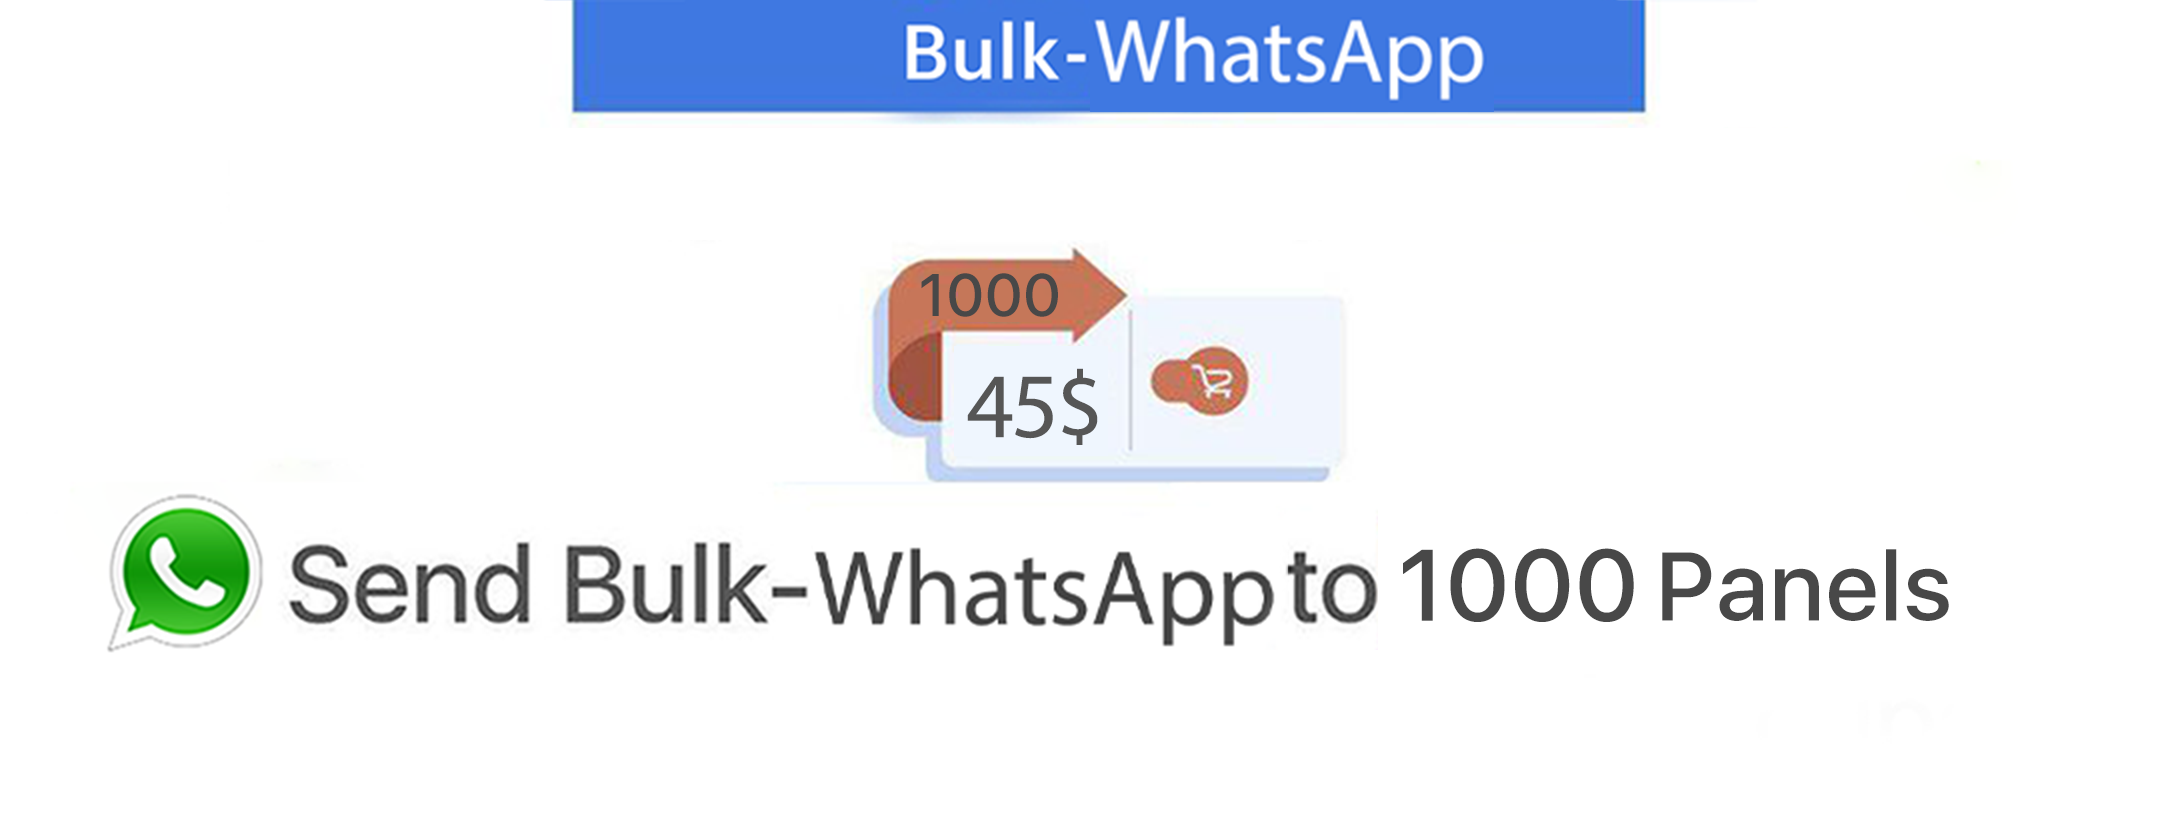 Bulk-Whatsapp - 1000 Panels